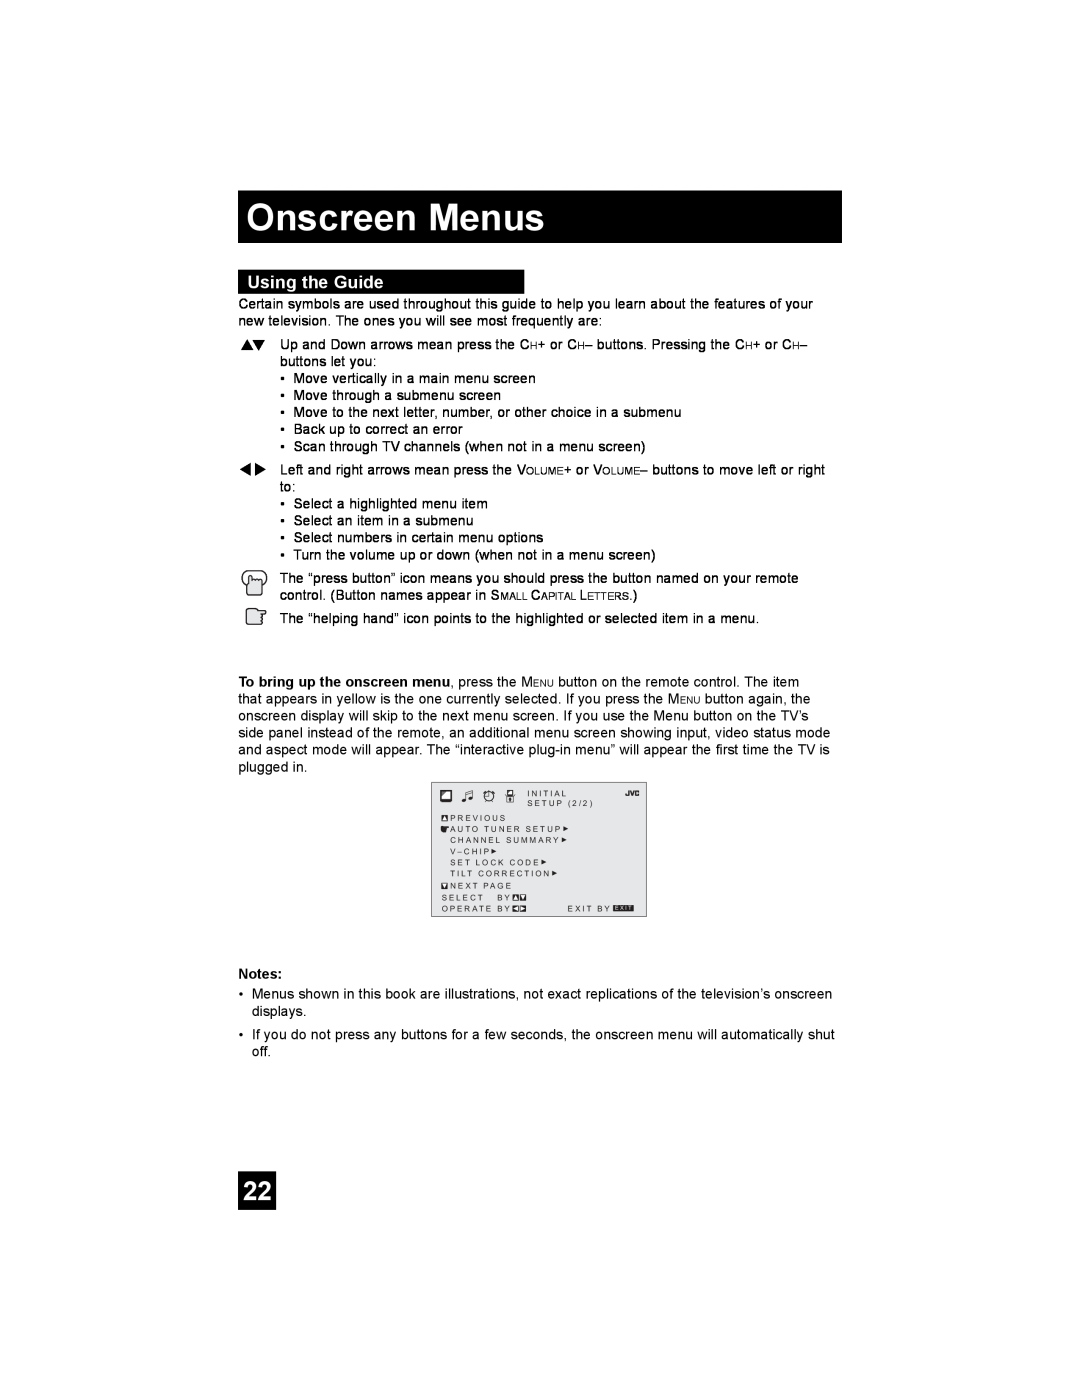 JVC AV 30W476 manual Onscreen Menus, Using the Guide 